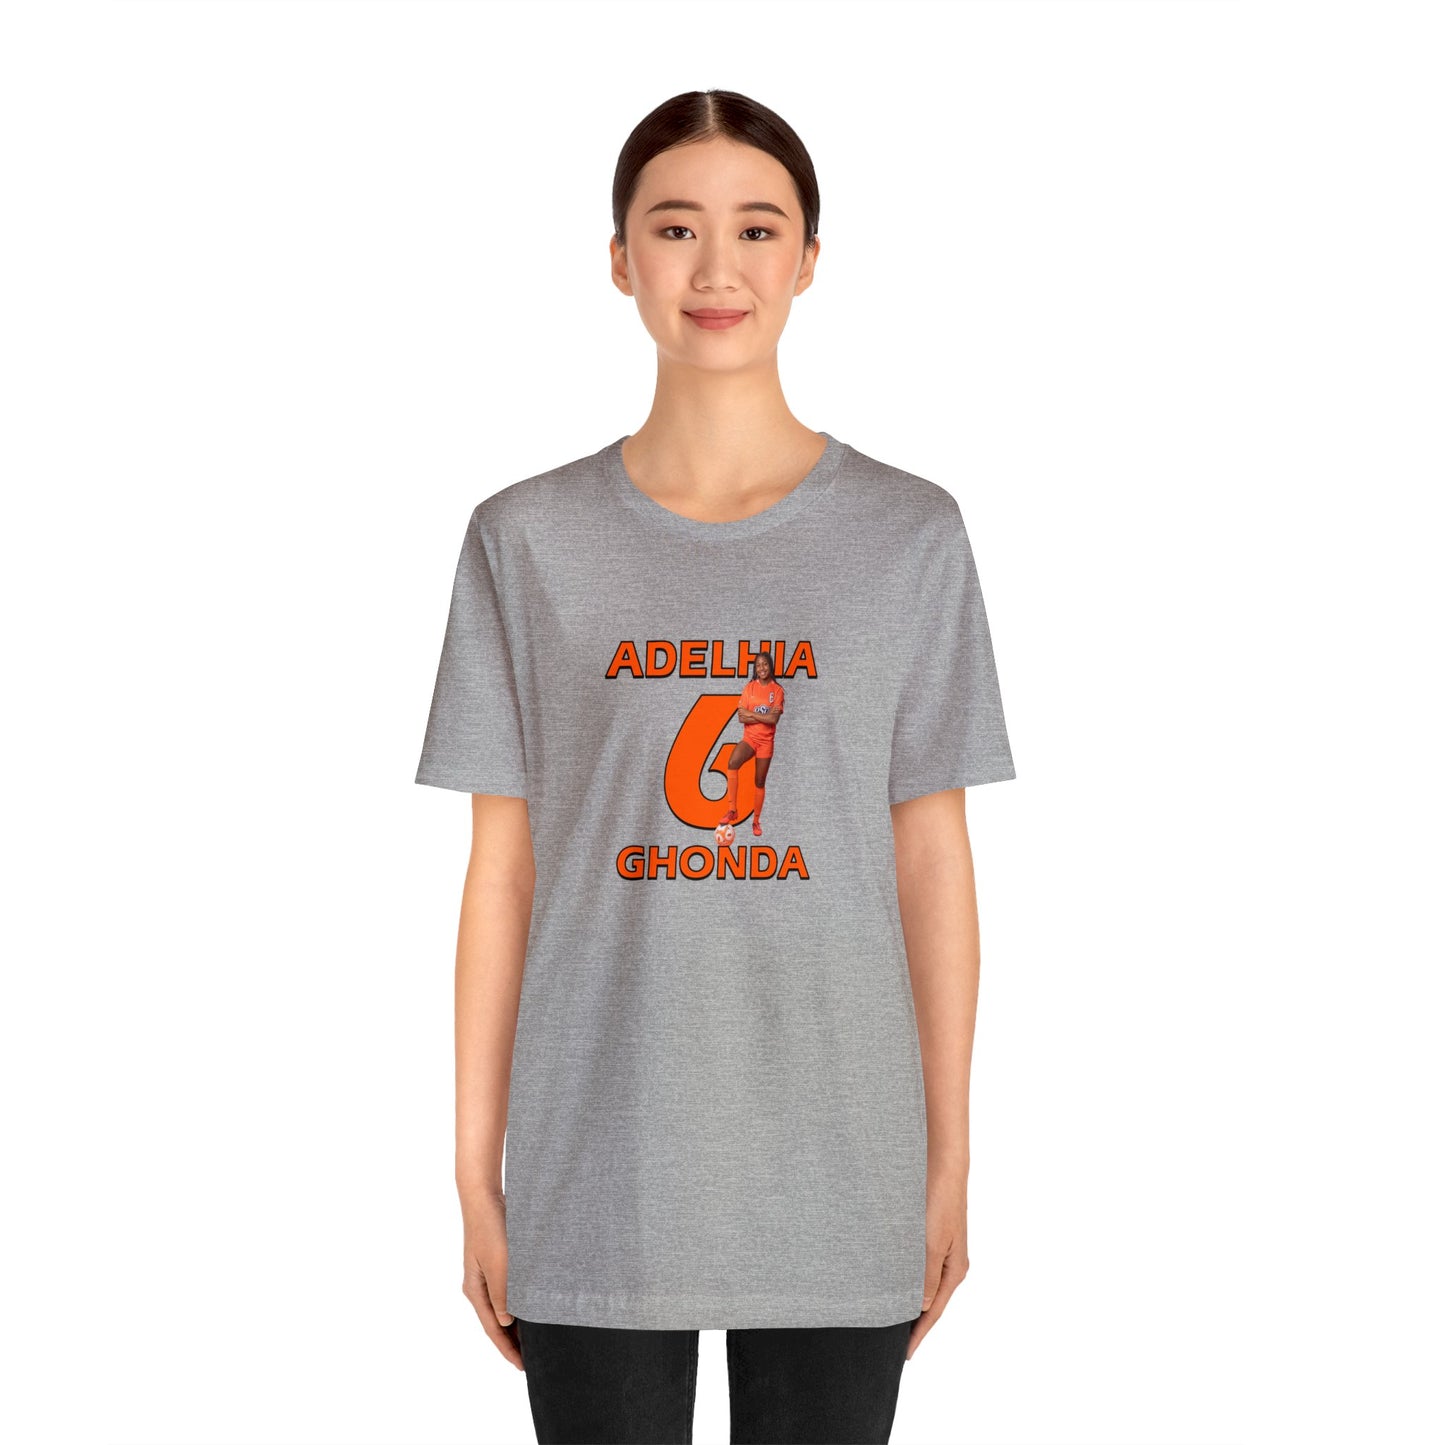 Adelhia Ghonda T-Shirt